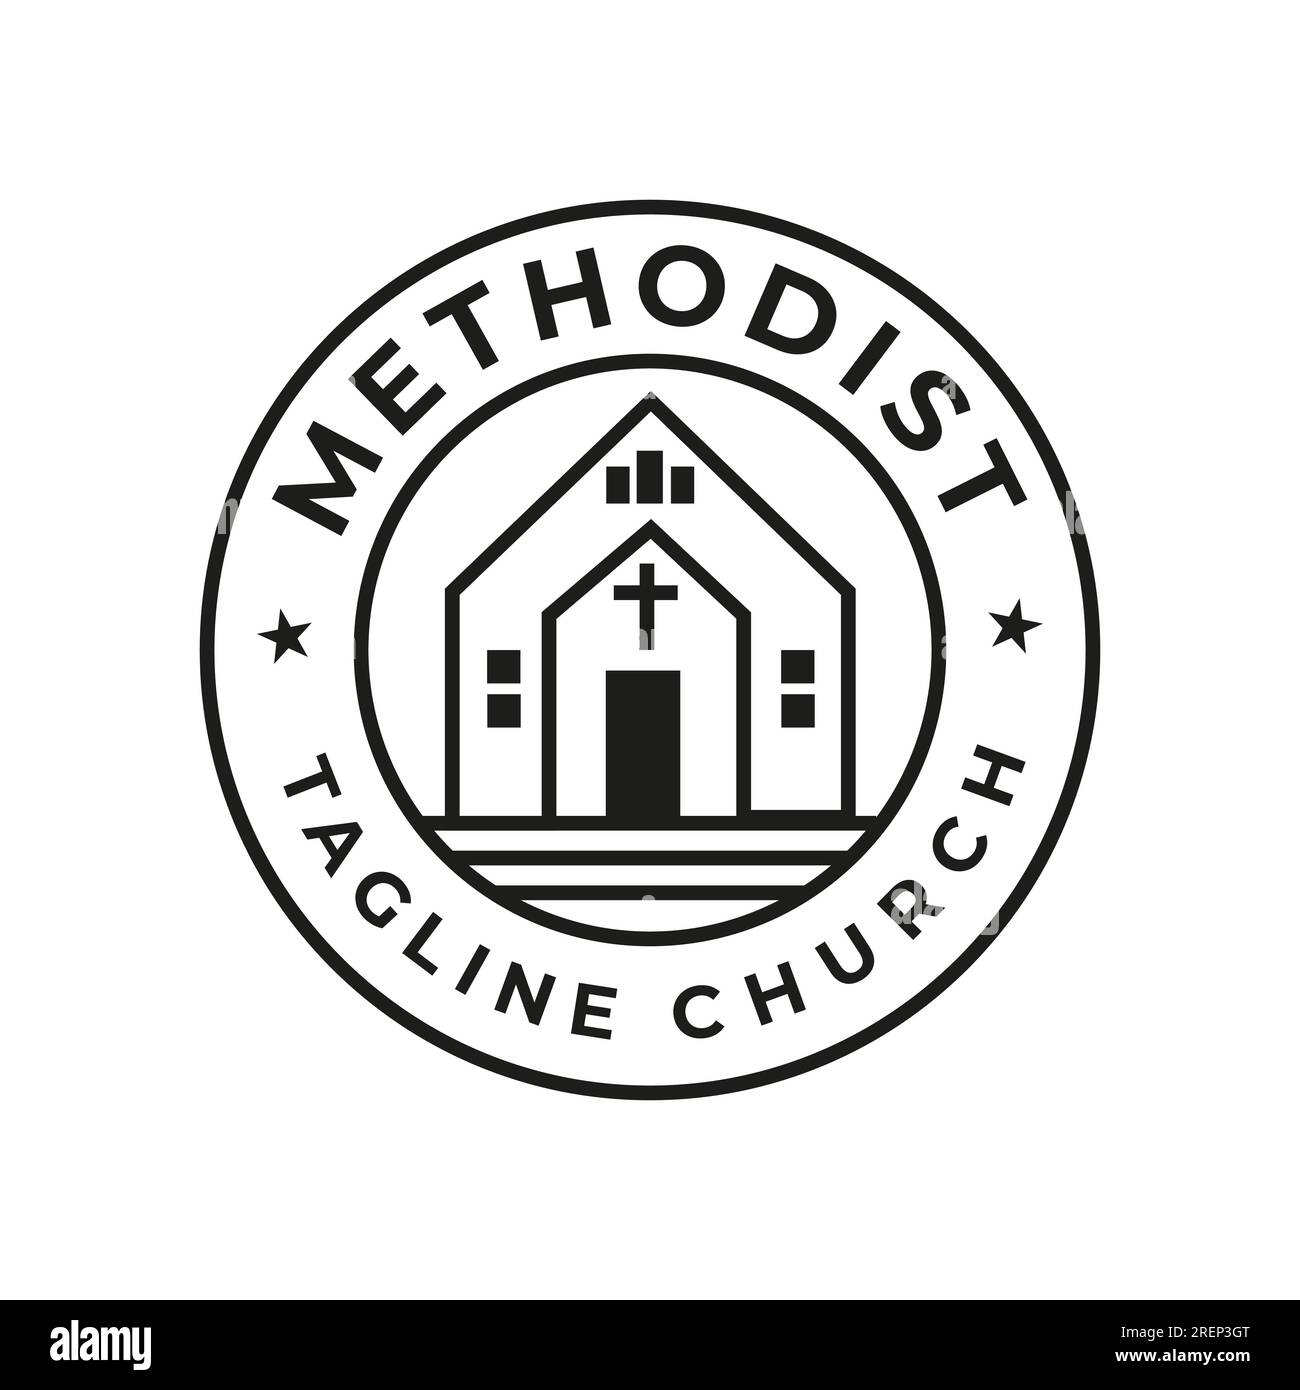 Methodist church design inspiration simple logo stamp Education Logo design vector Stock Vector